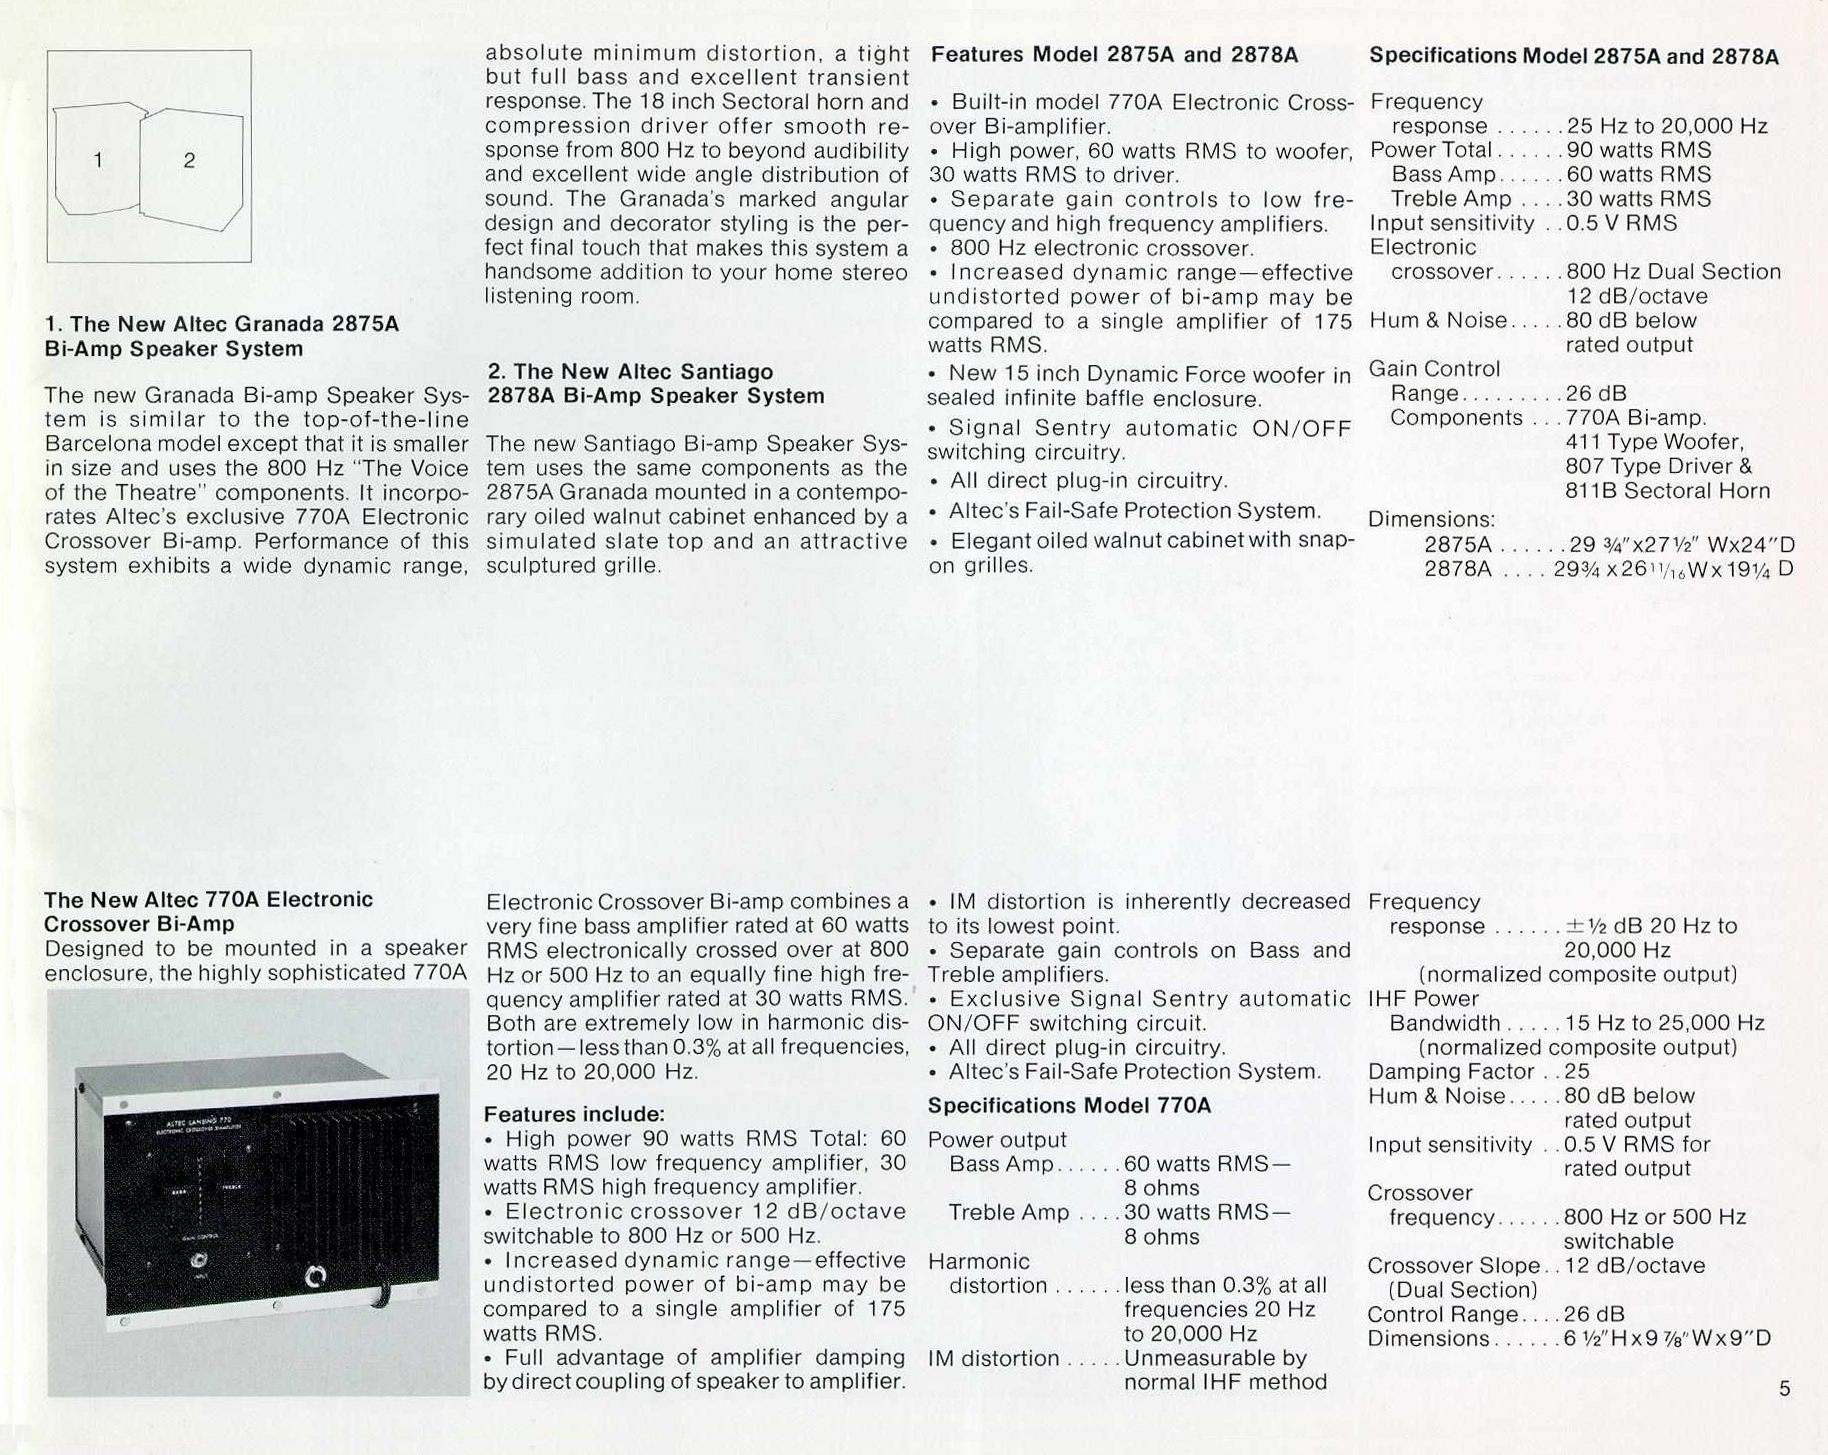 1971 Altec Lansing Katalog-7.jpg